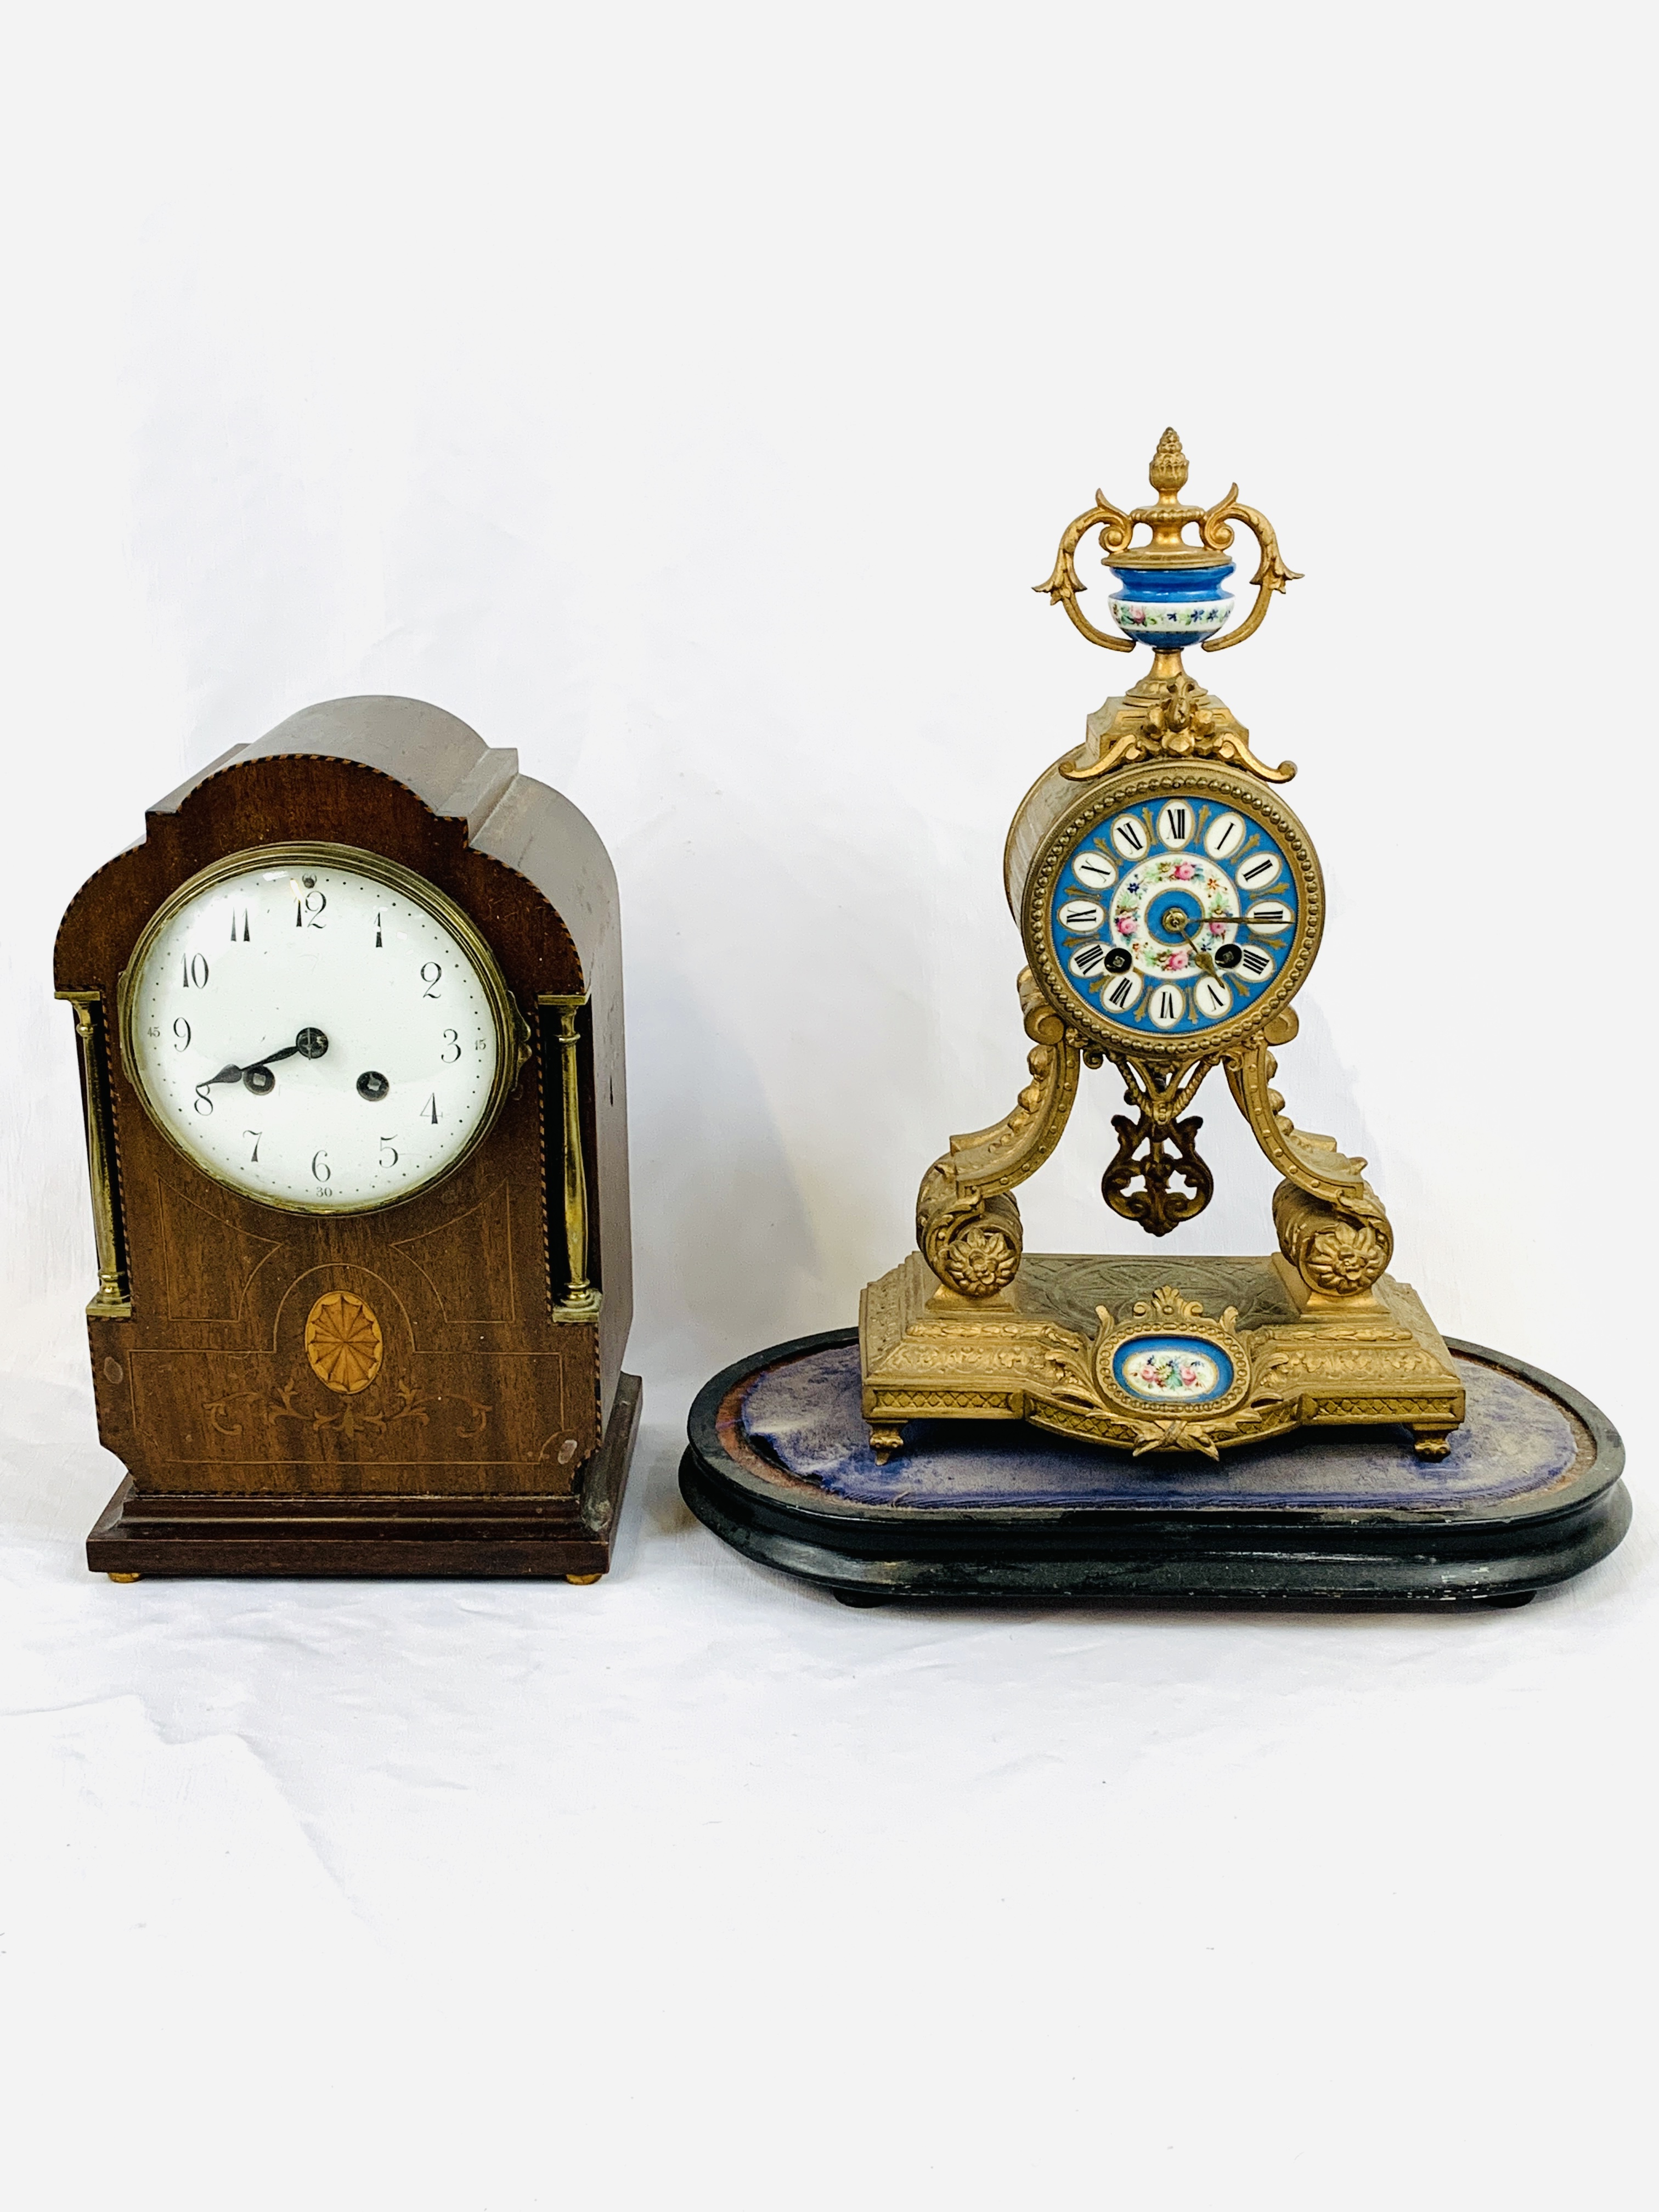 Mahogany mantel clock together with an ormolu mantel clock